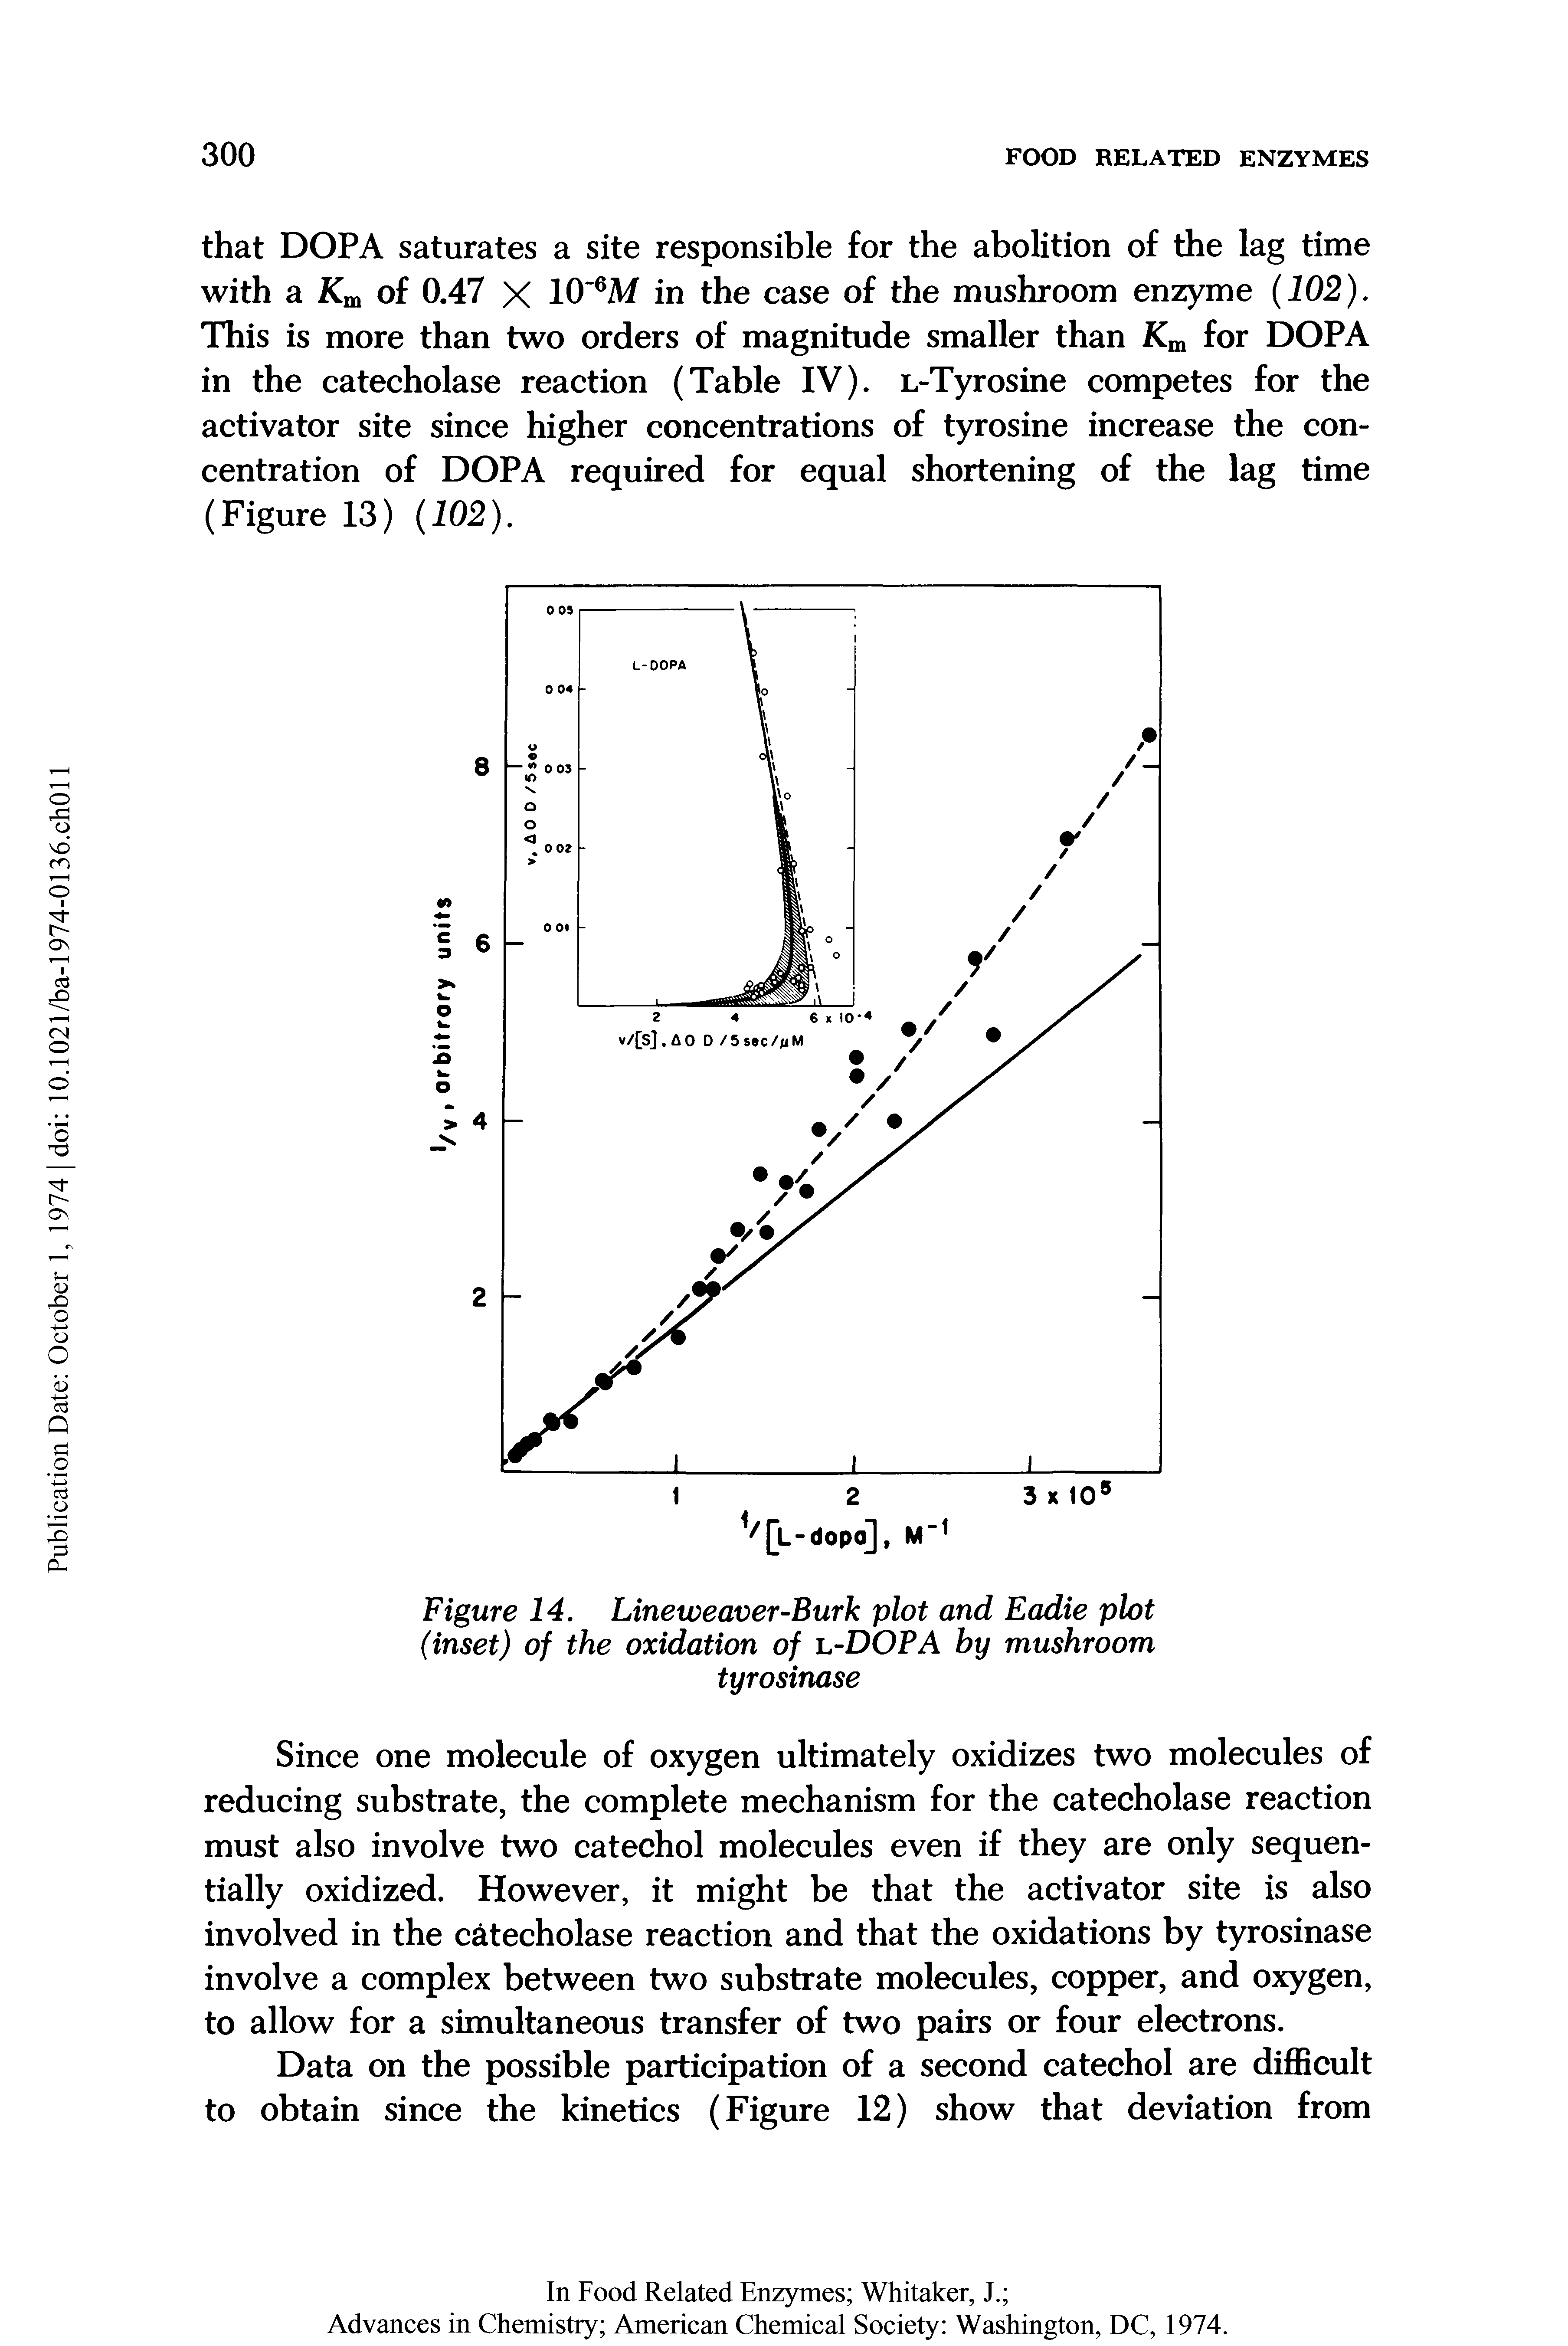 Figure 14. Lineweaver-Burk plot and Eadie plot (inset) of the oxidation of la-DOFA by mushroom tyrosinase...